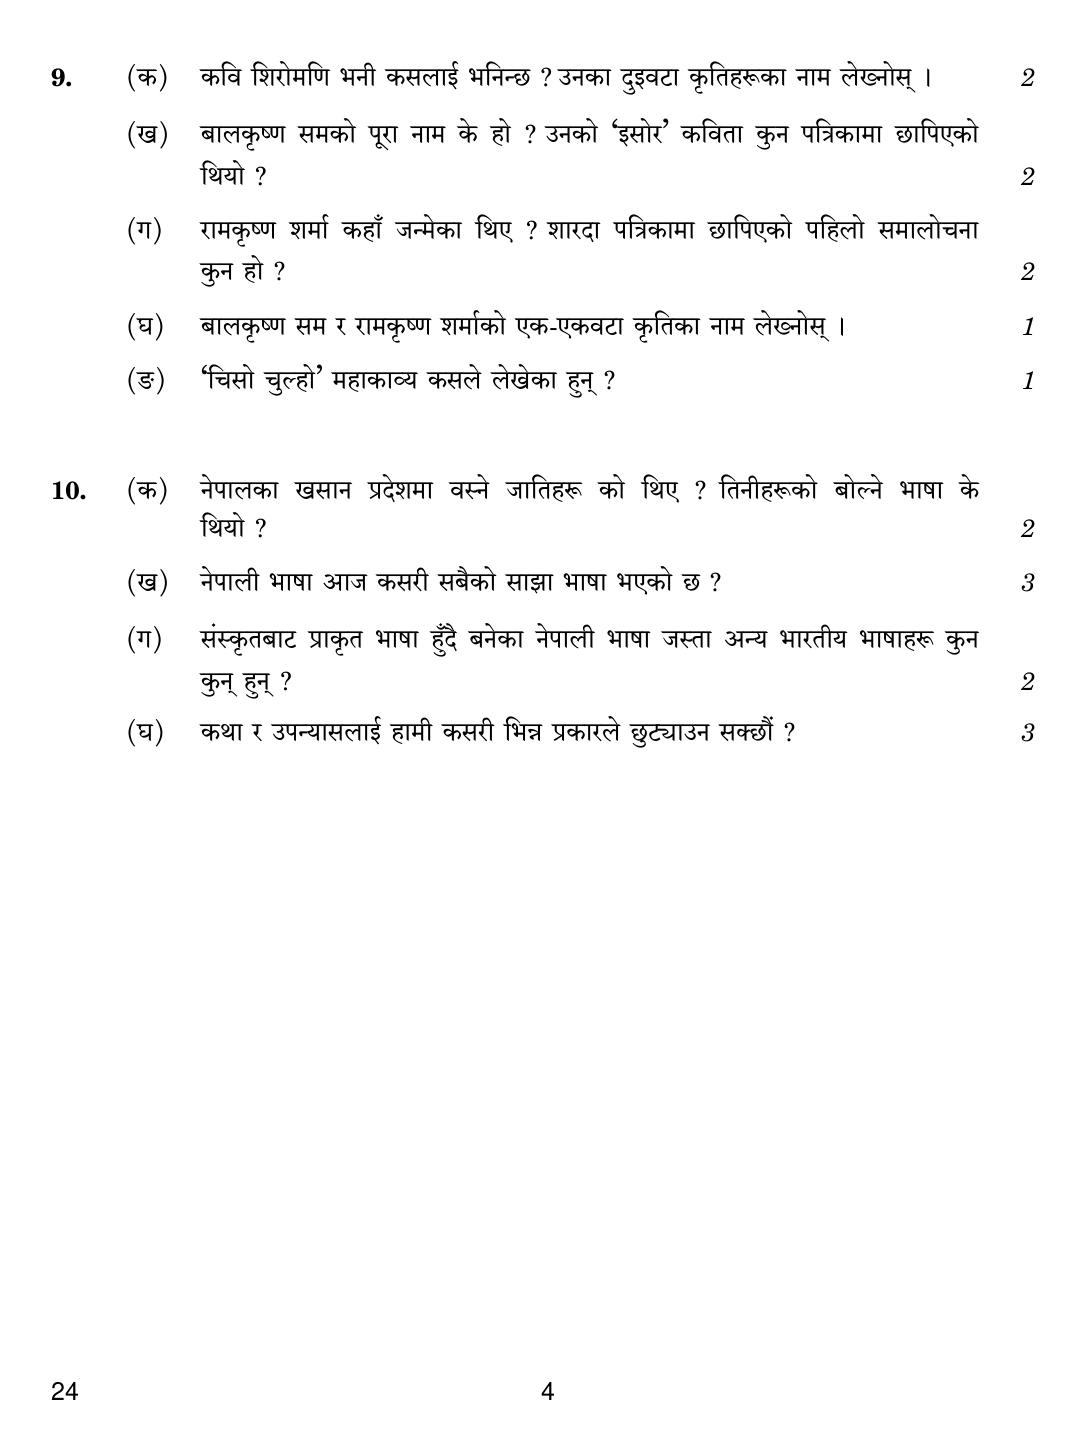 CBSE Class 12 24 Nepali 2019 Question Paper - Page 4